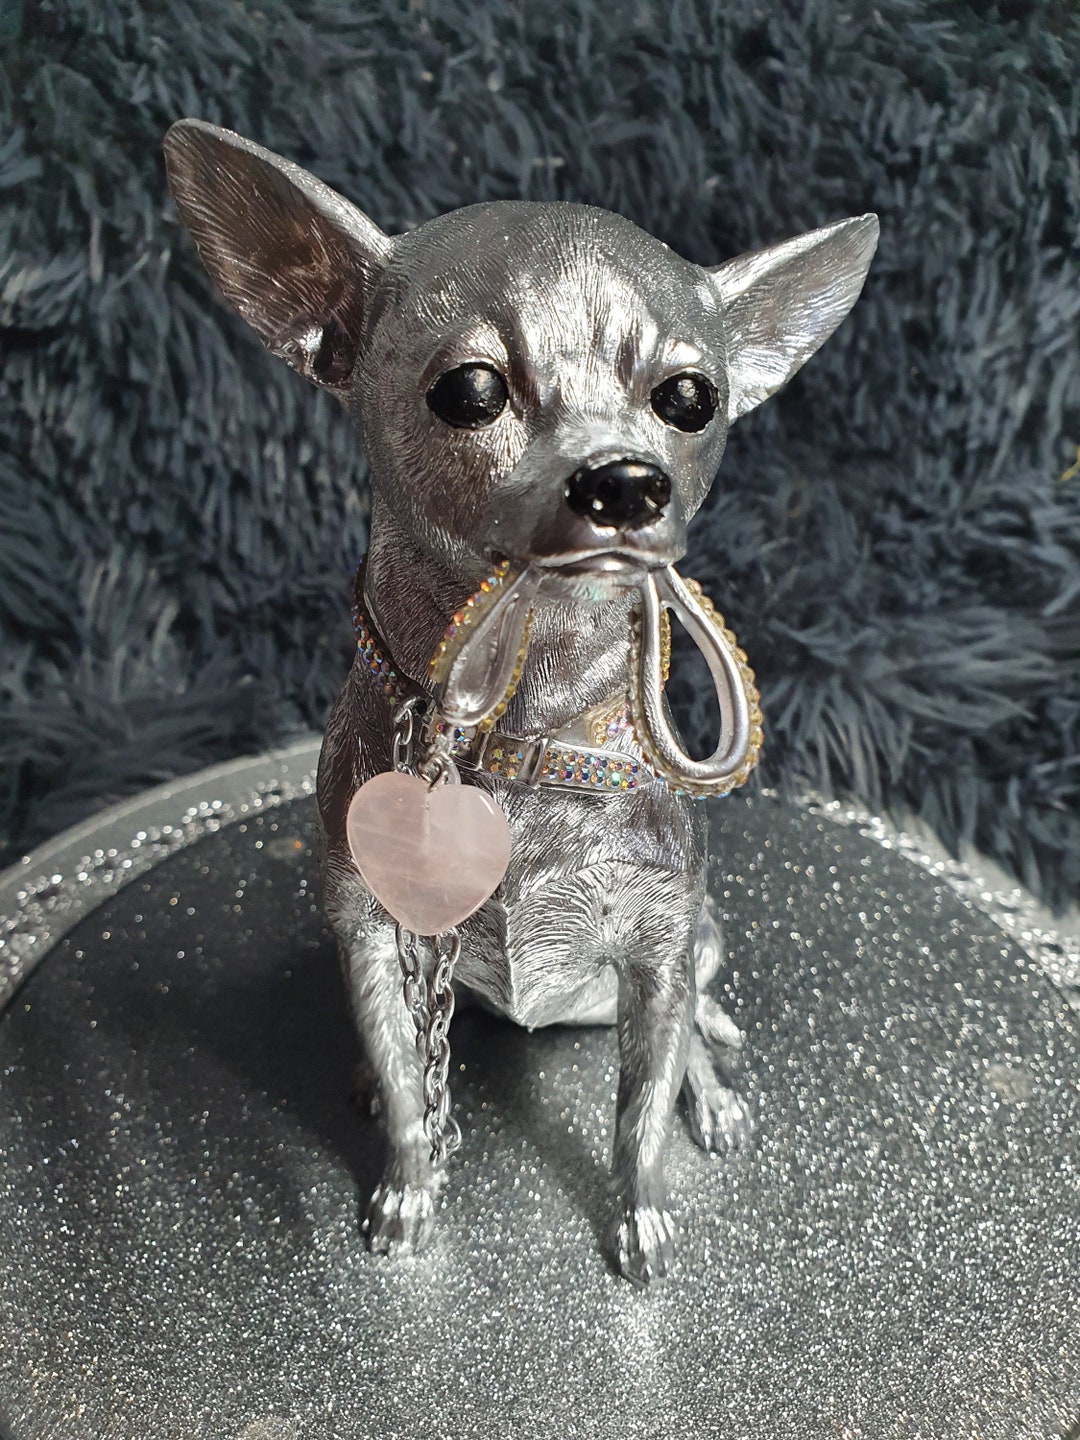 Little Luxuries Designs Chihuahua Dog Shaped Rhinestone Keychain/Bag Charm